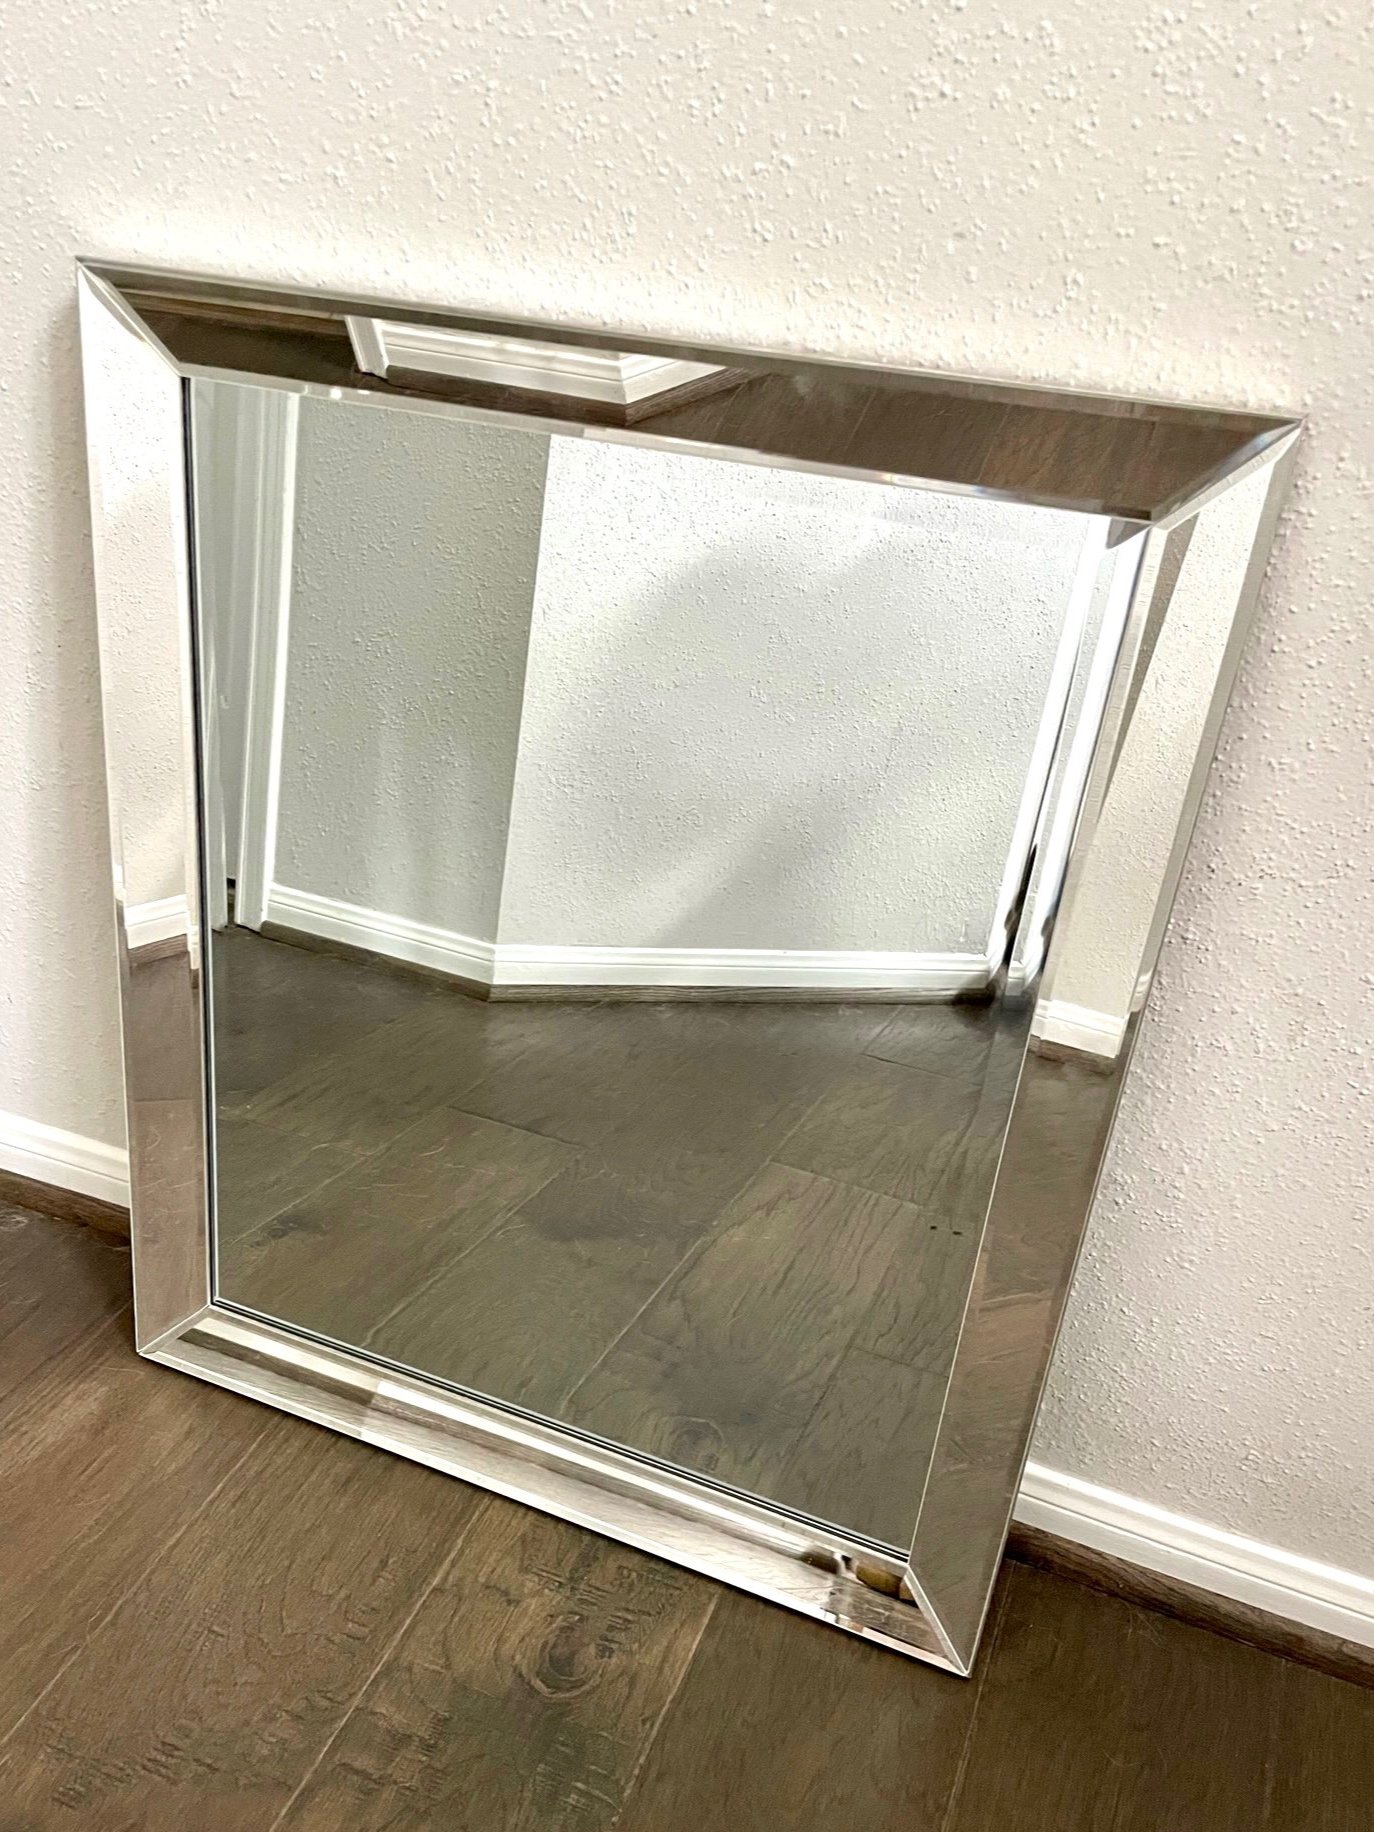 24 x 28 mirror frame